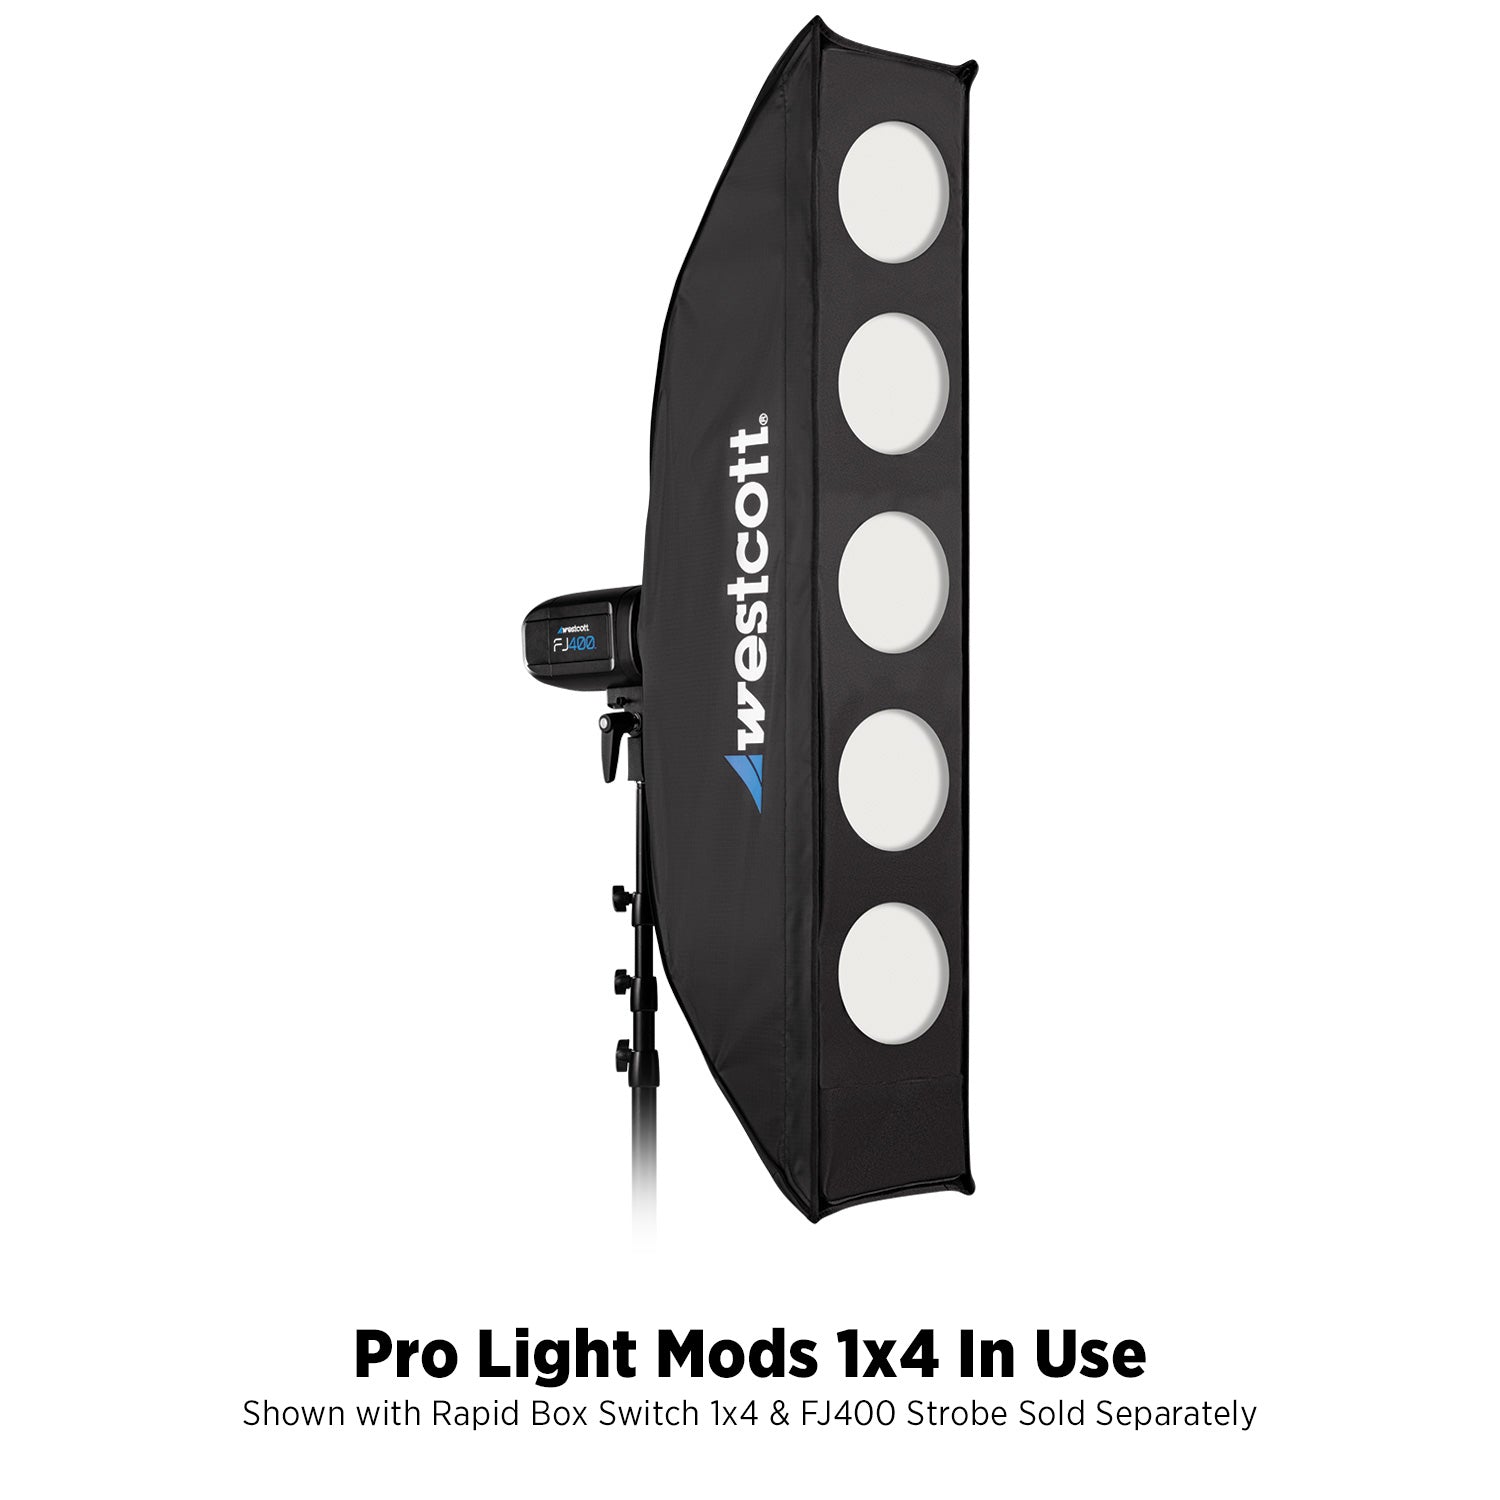 Pro Light Mods 1x4